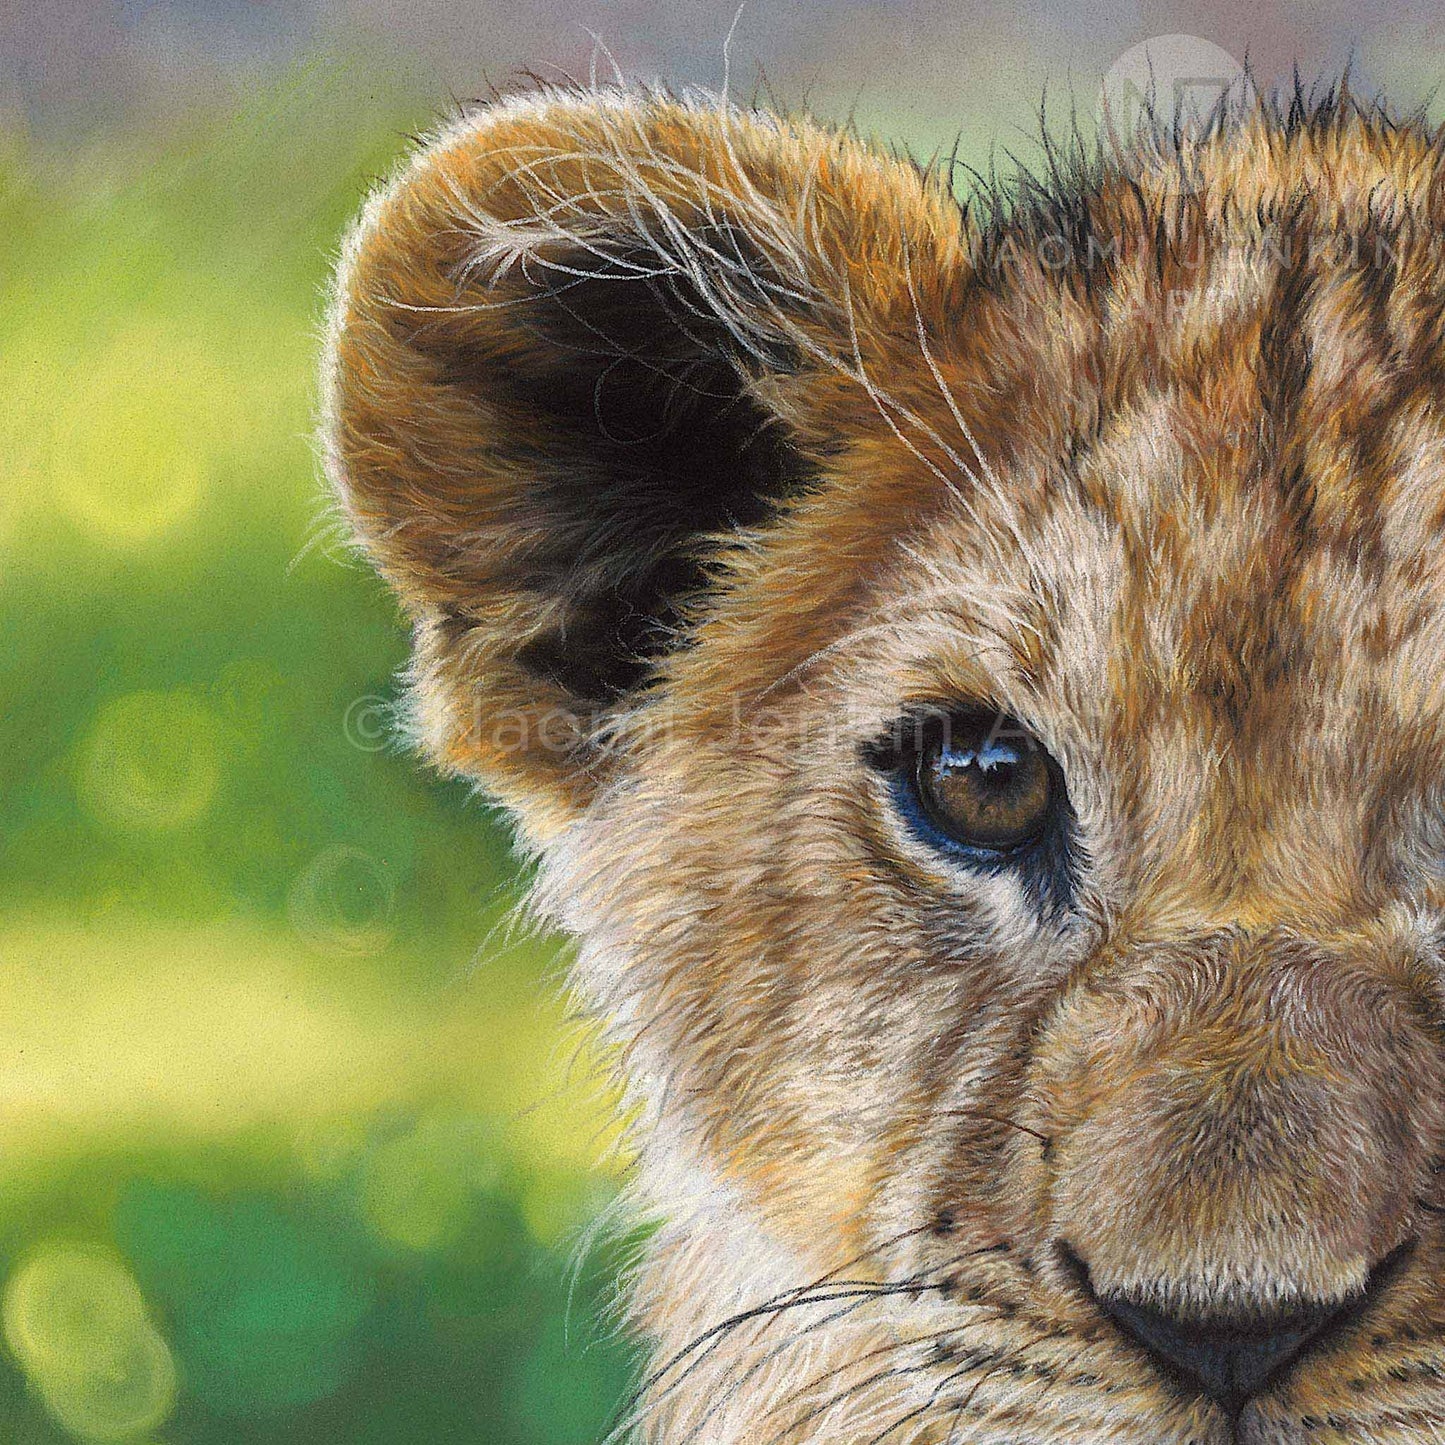 Lion painting by wildlife artist Naomi Jenkin.